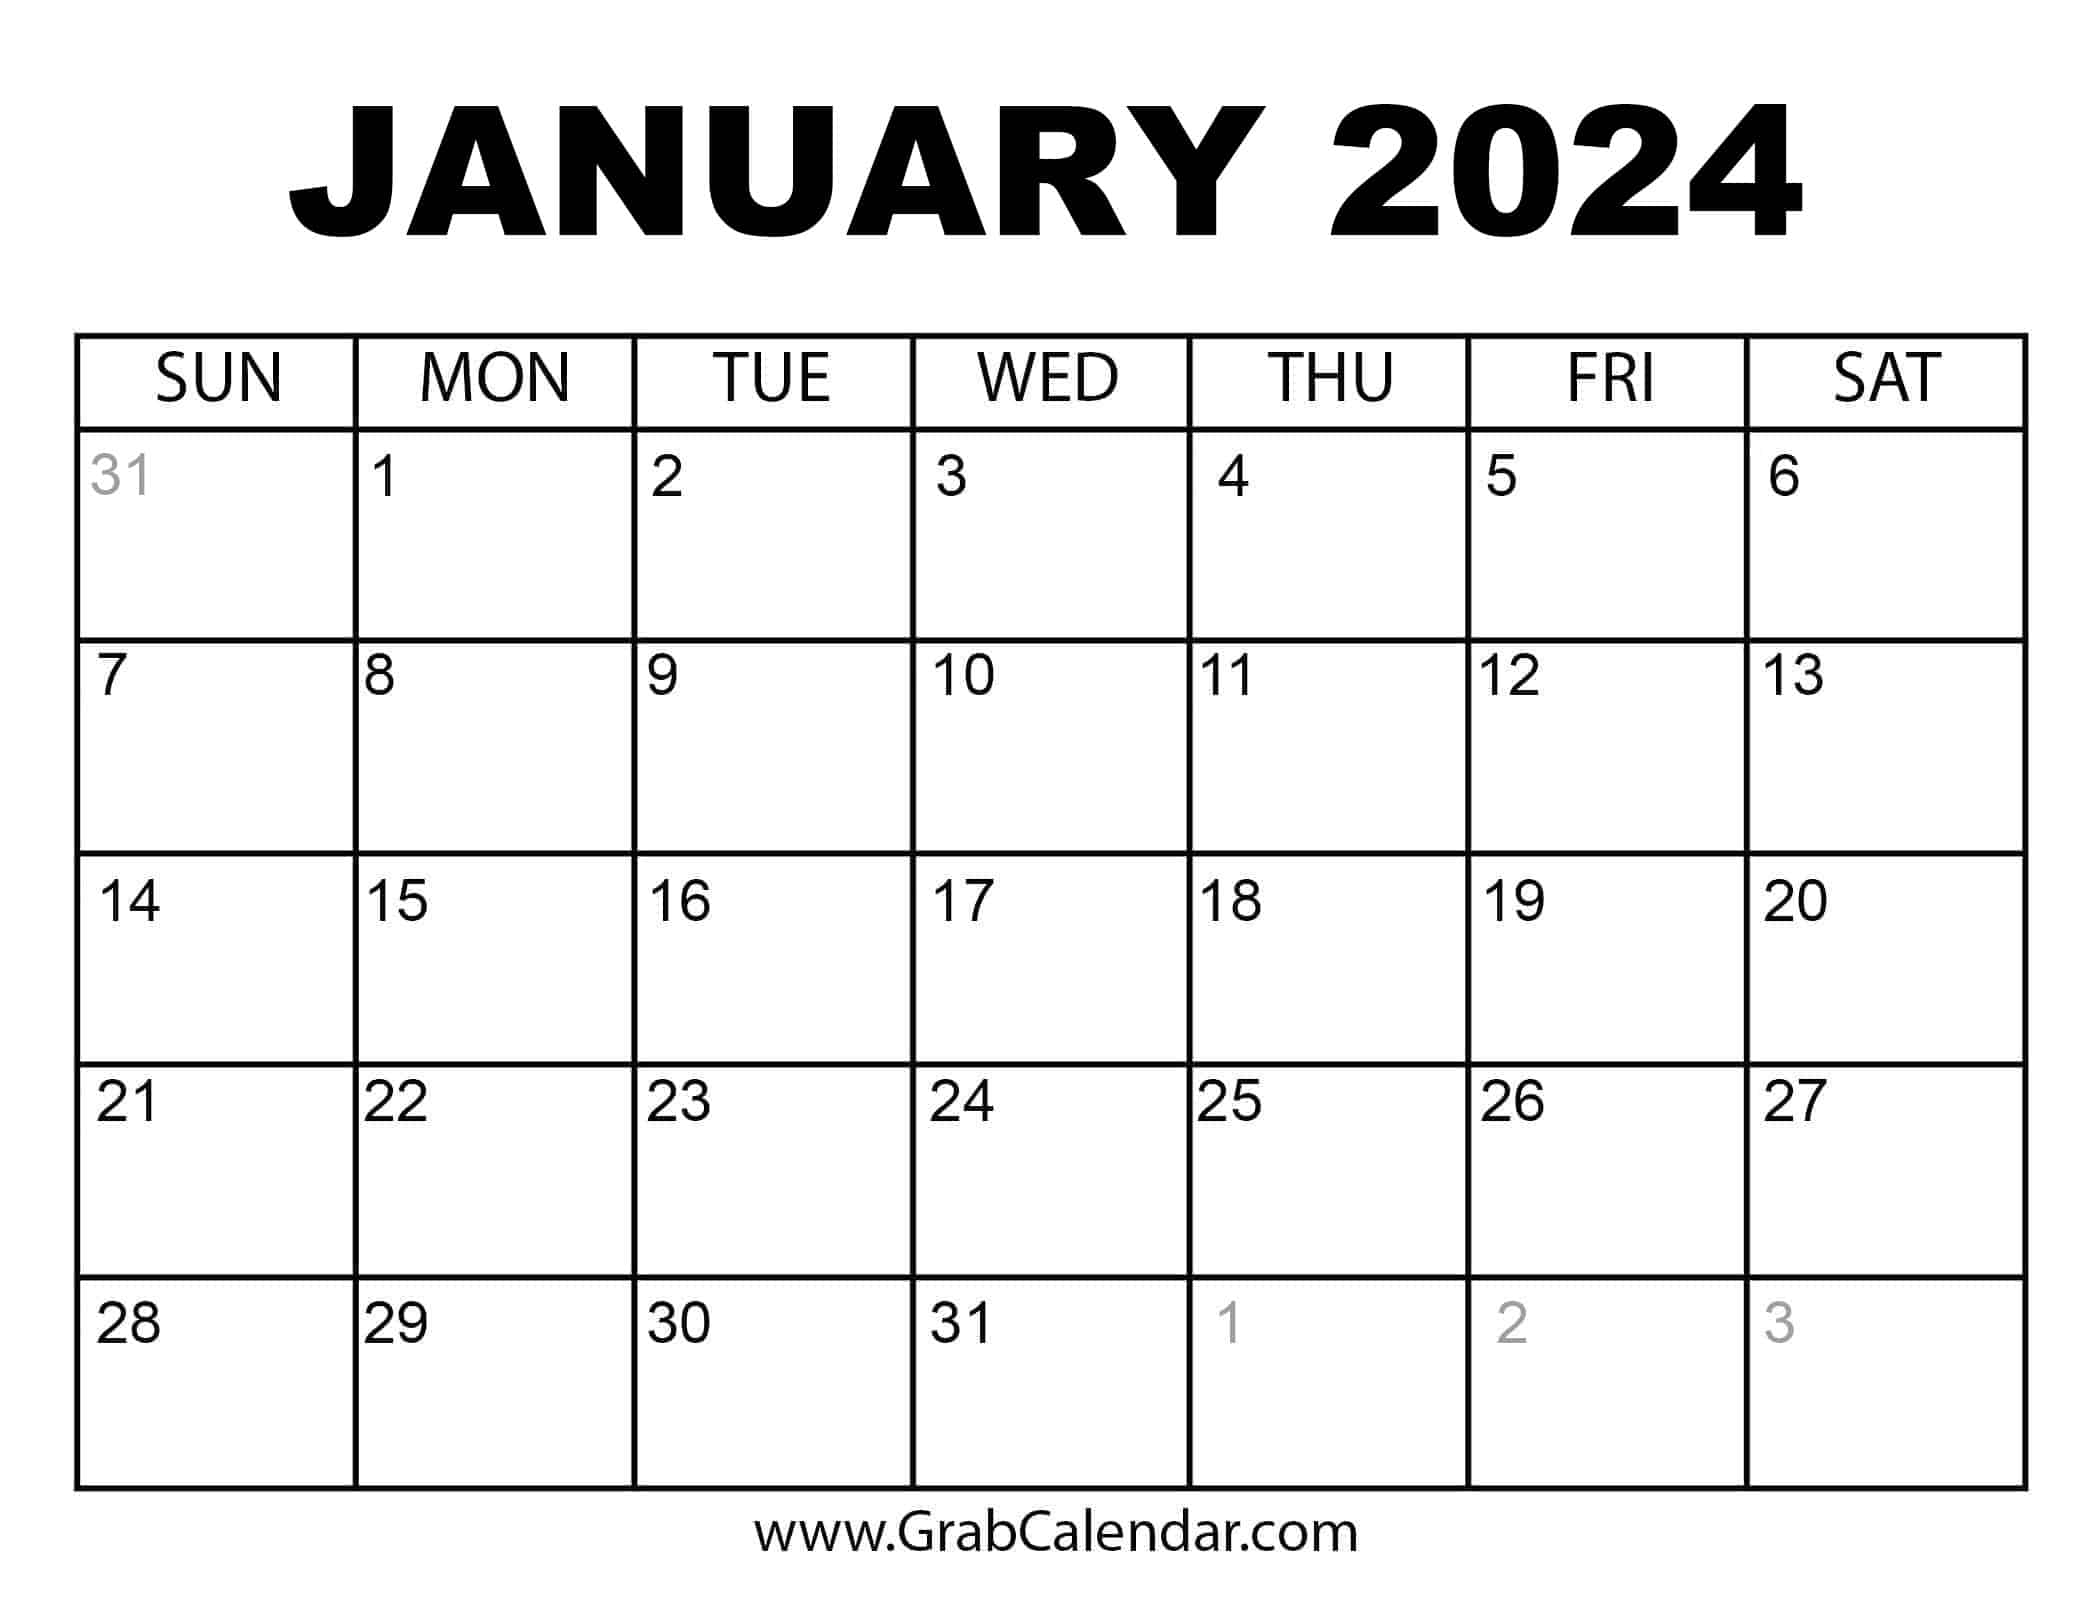 January Calendar For 2024 Aurel Caresse